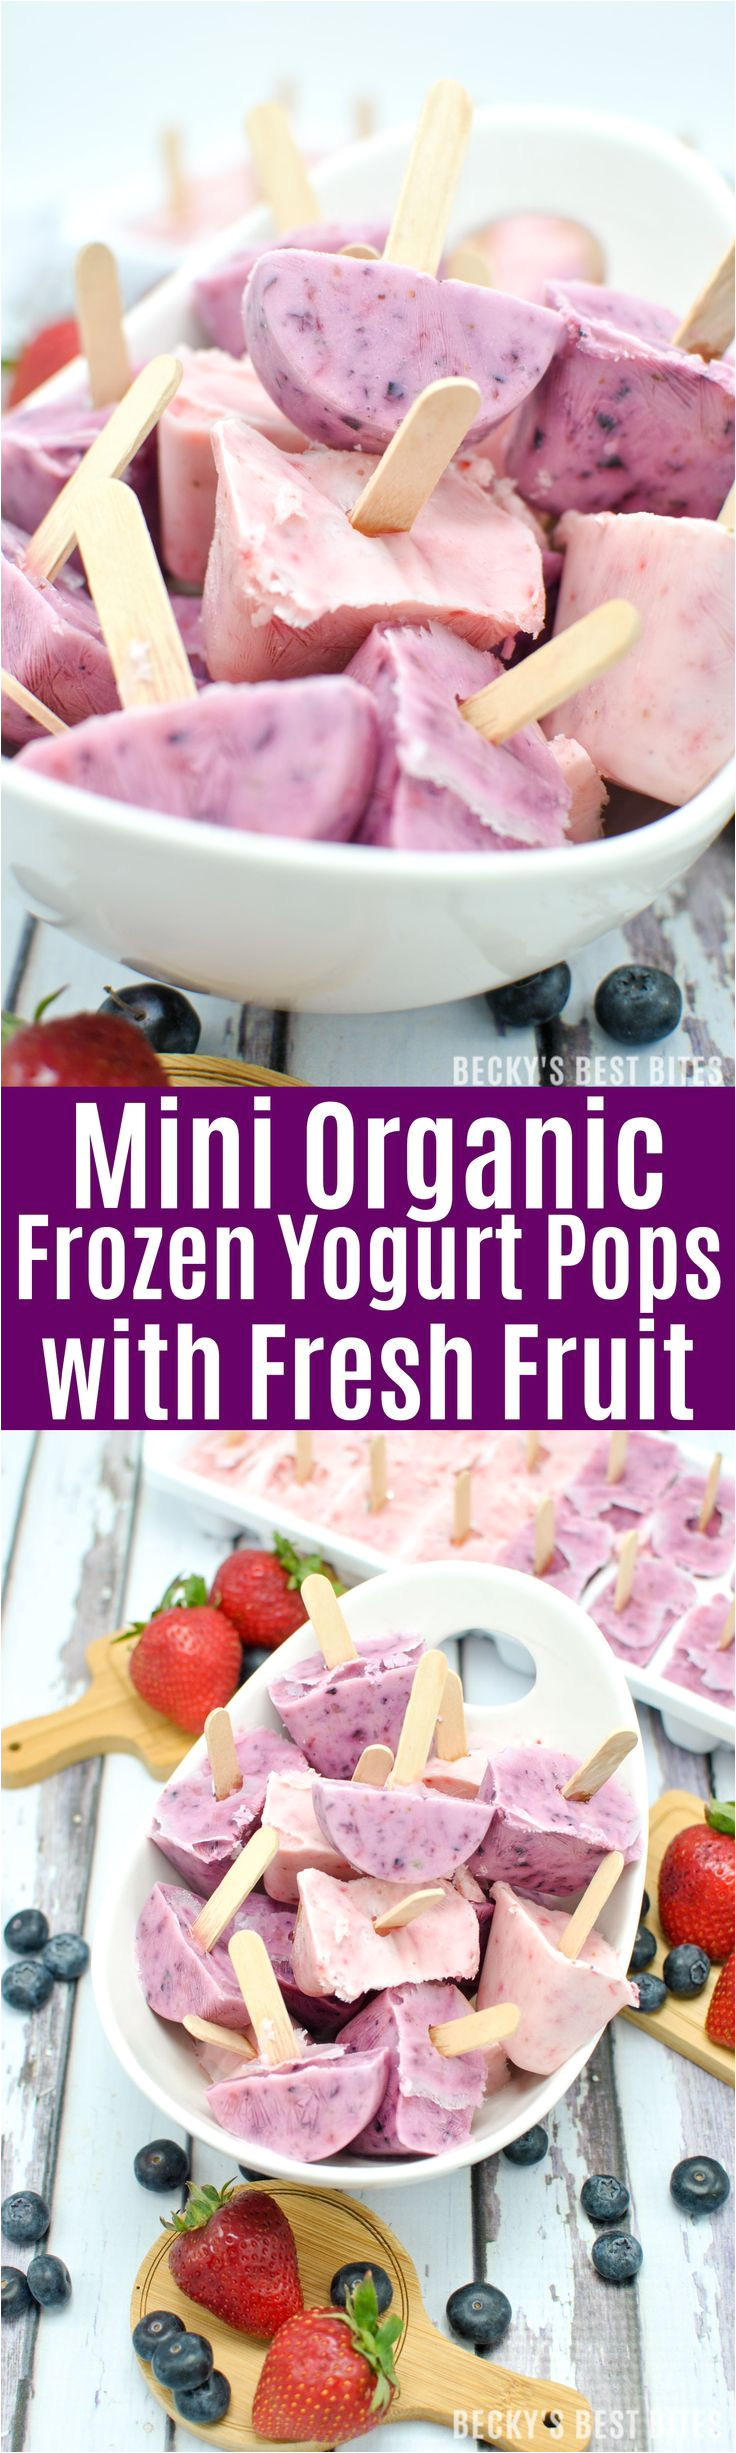 mini organic frozen yogurt pops with fresh fruit is an easy healthy summer kid friendly